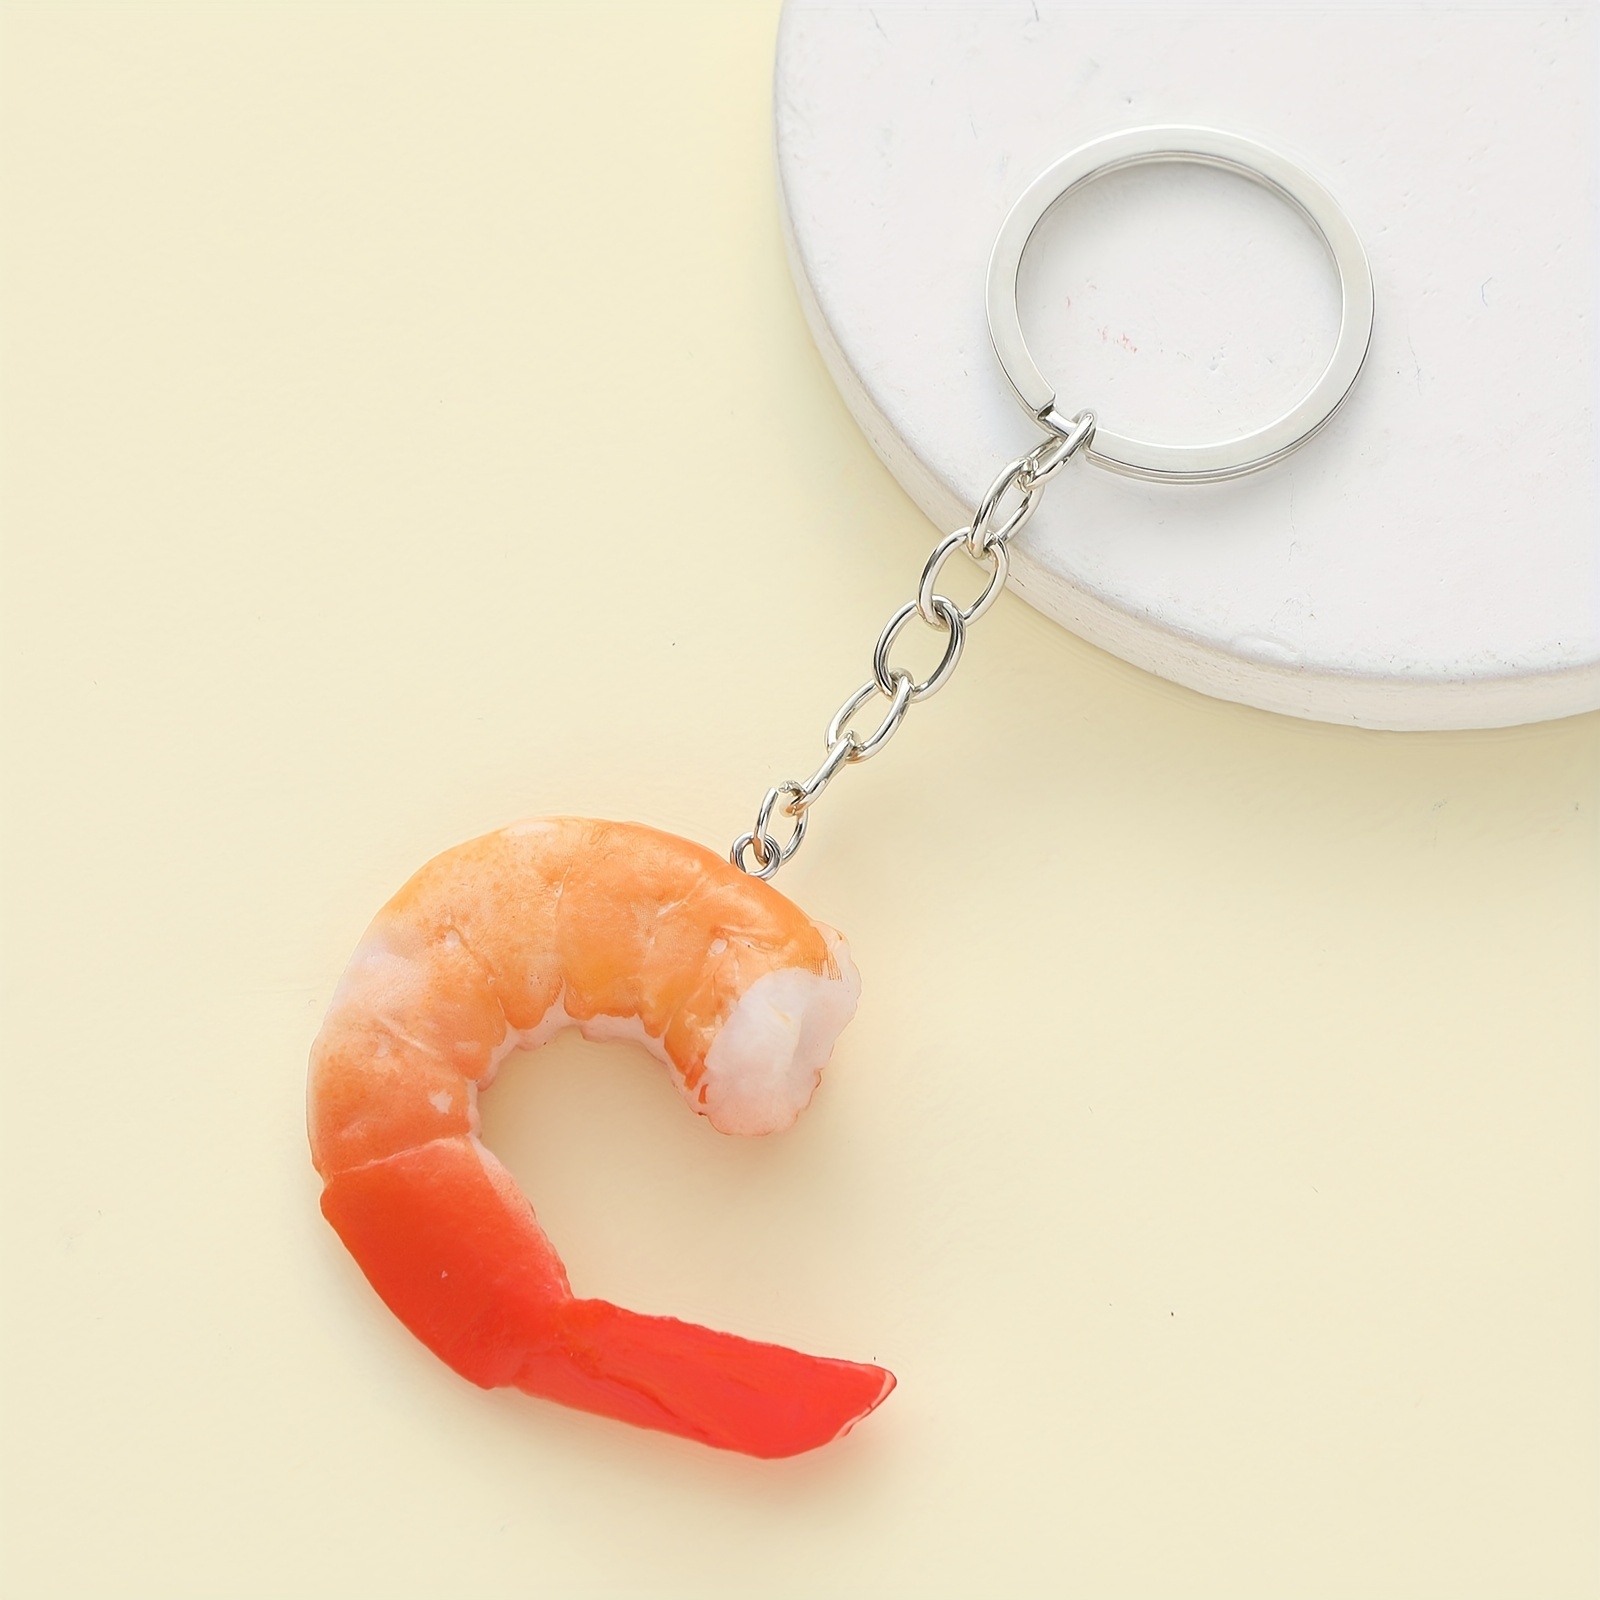 Fashion shrimp key chain new creative cute simulation food car bag